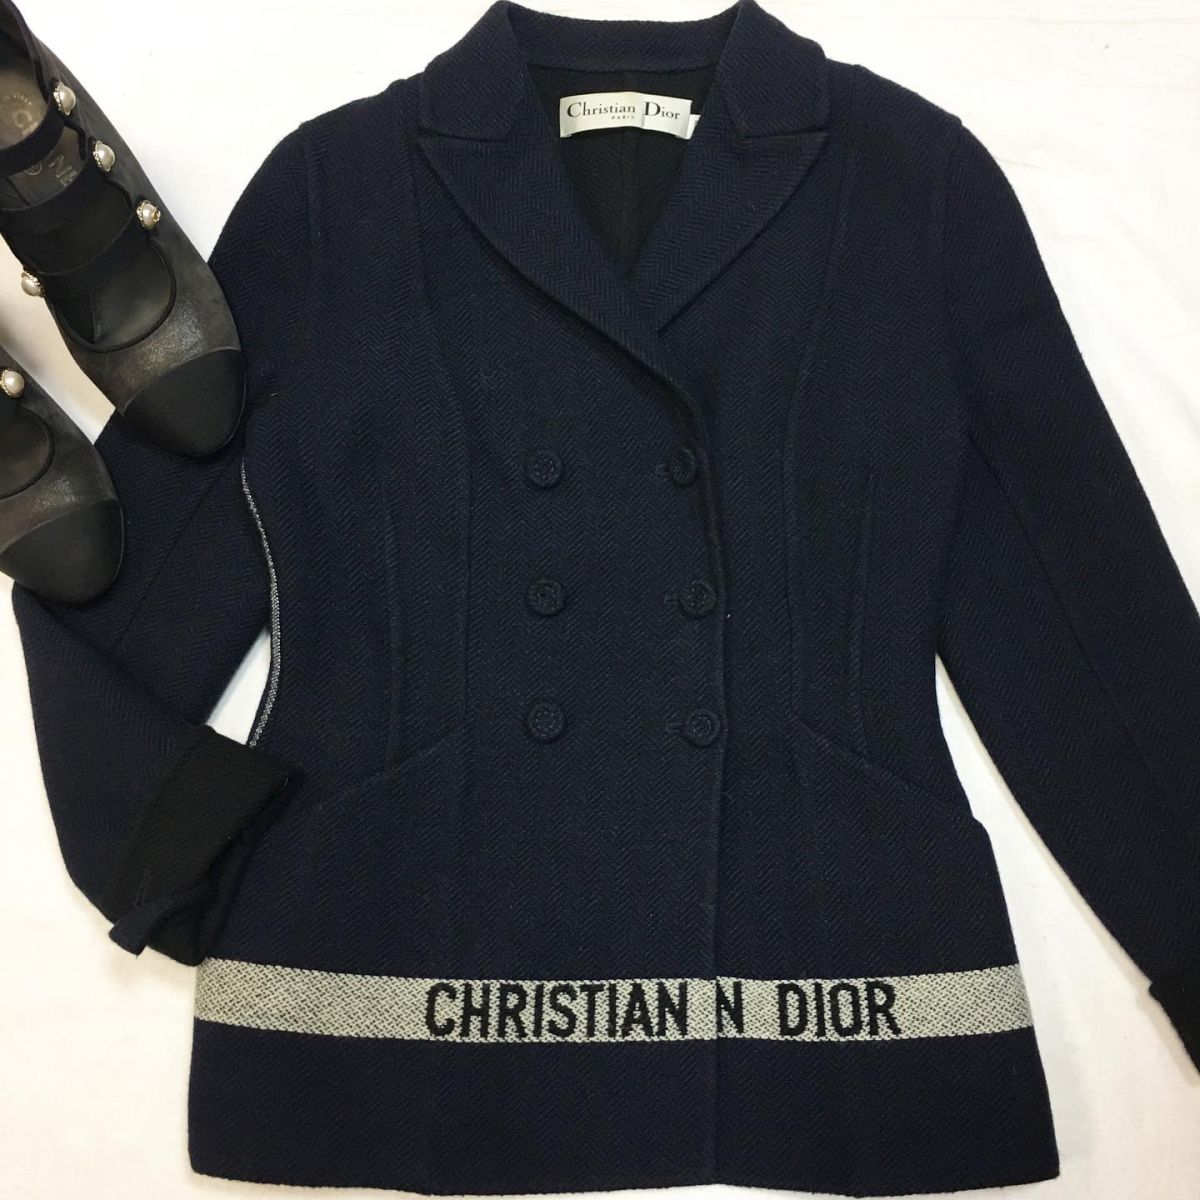 Жакет Christian Dior  размер 38/42 цена 53 847 руб